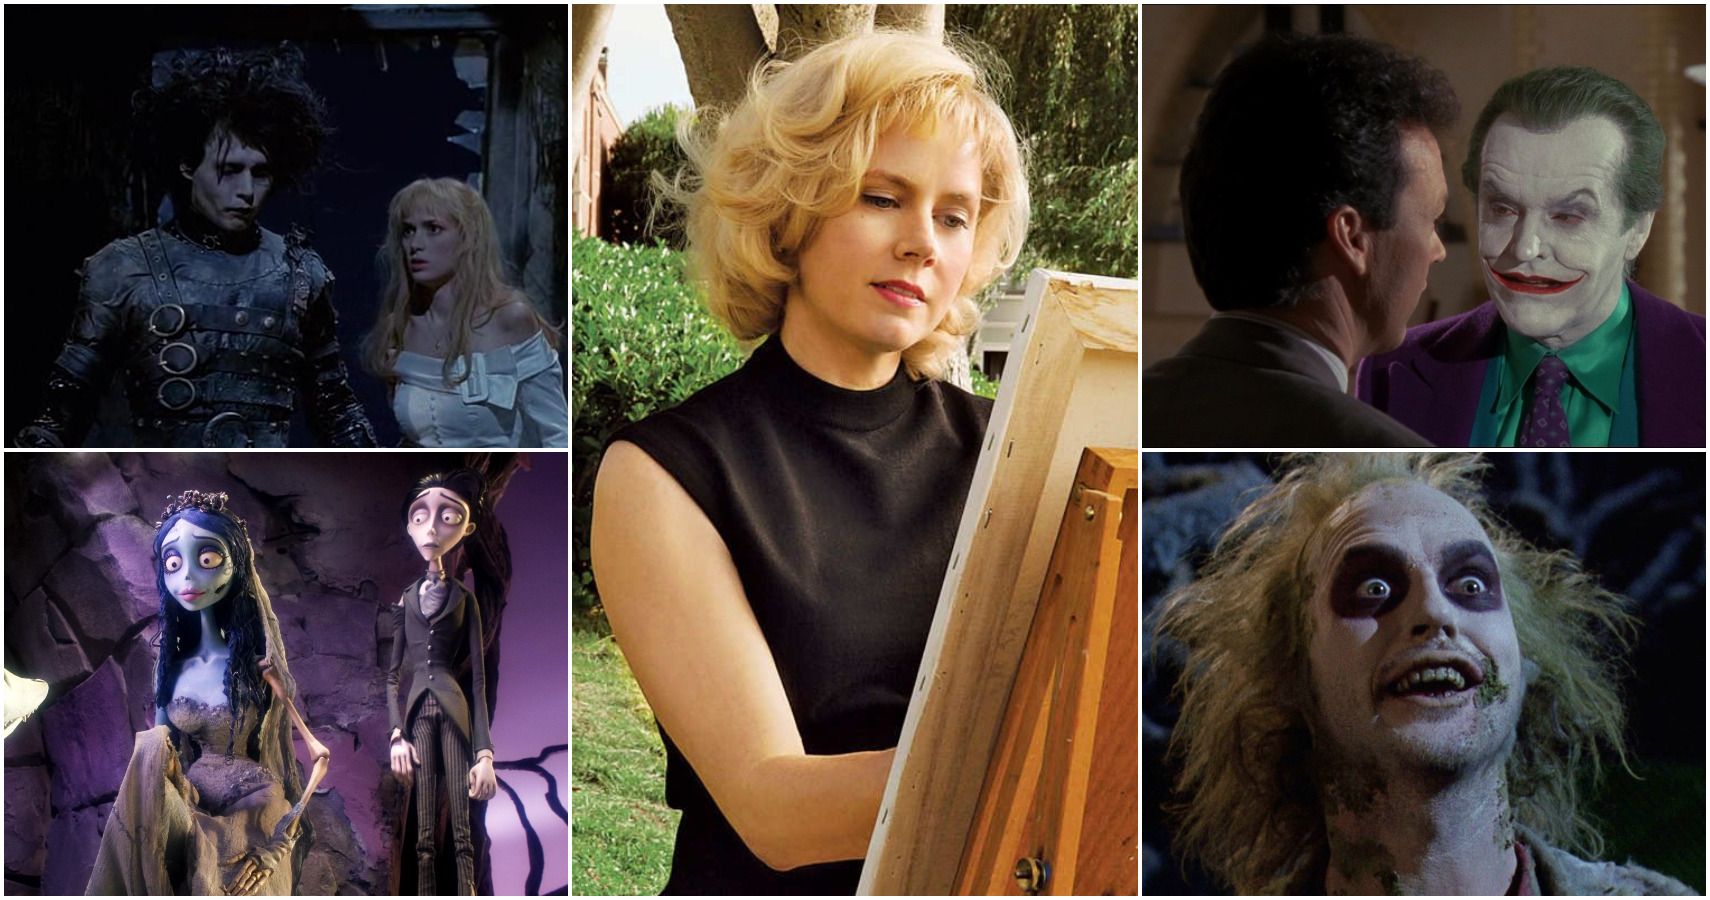 Tim Burton's 10 Best Movies (According to IMDB)